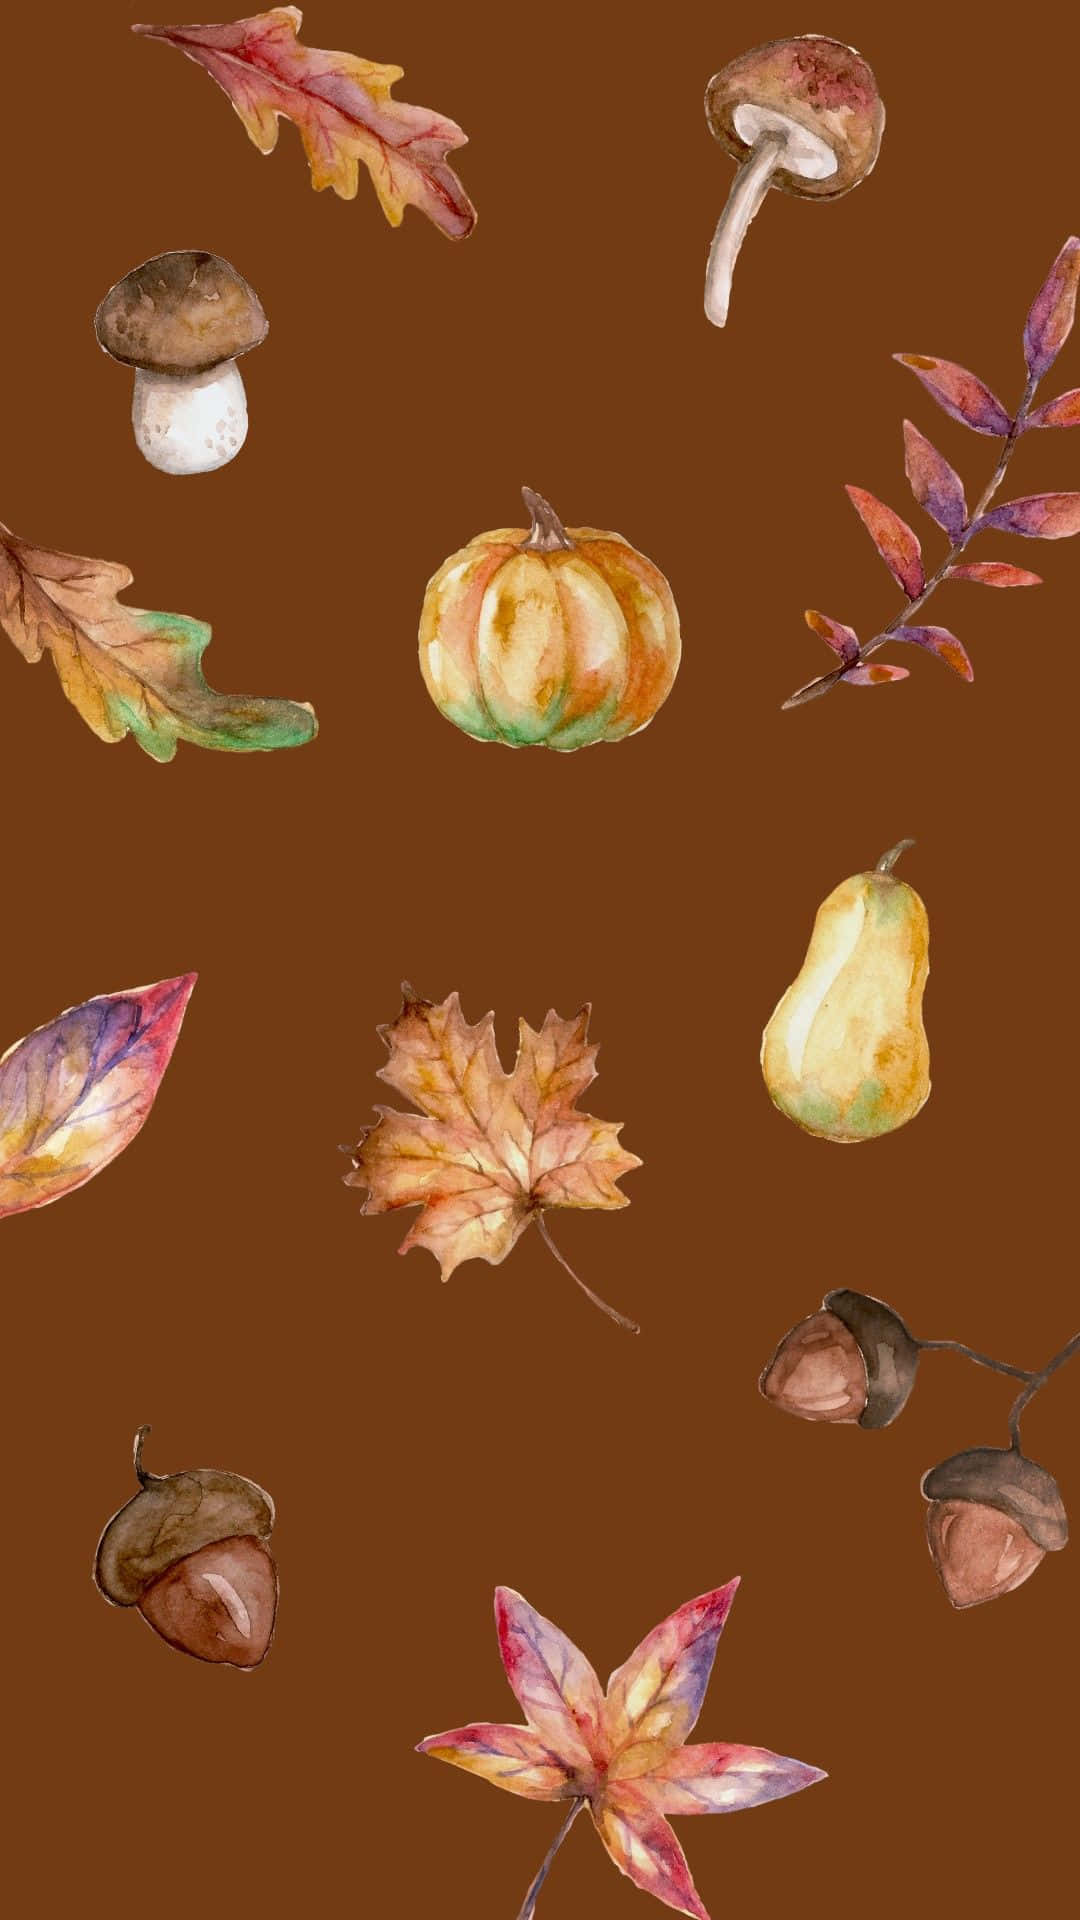 “Relax and Enjoy the Minimalist Autumn Landscape” Wallpaper